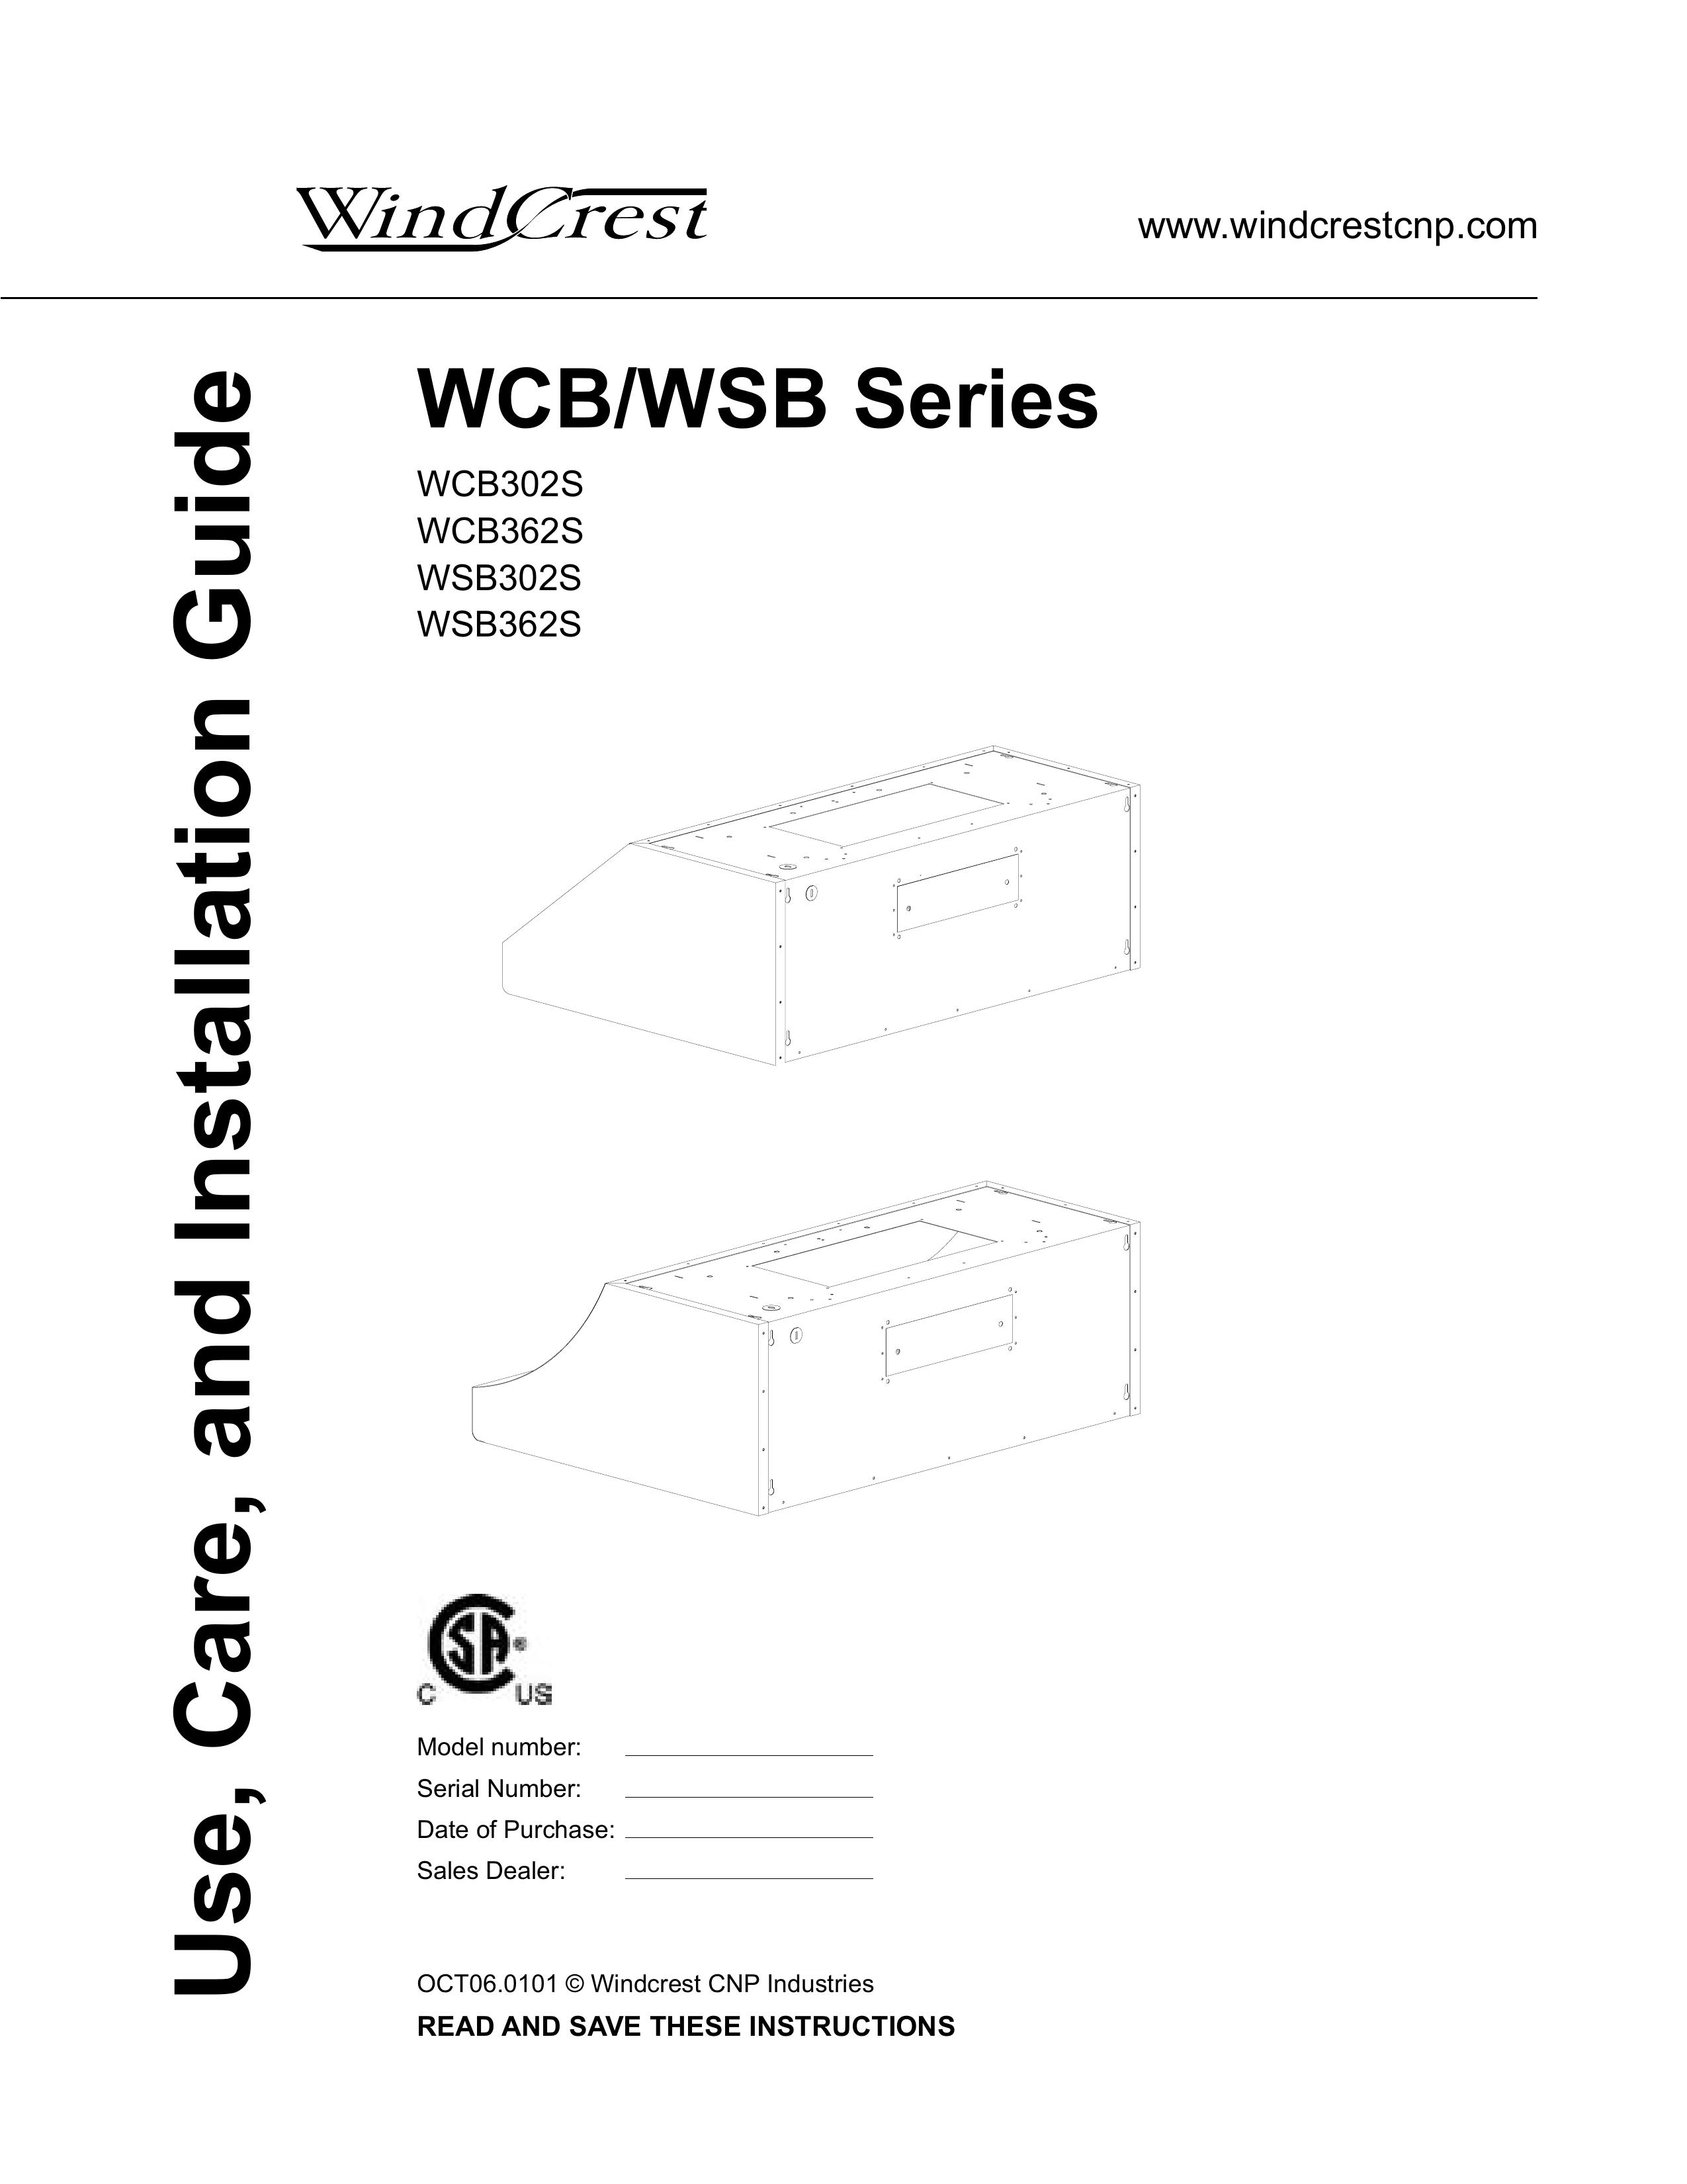 Wind Crest WSB302S Ventilation Hood User Manual